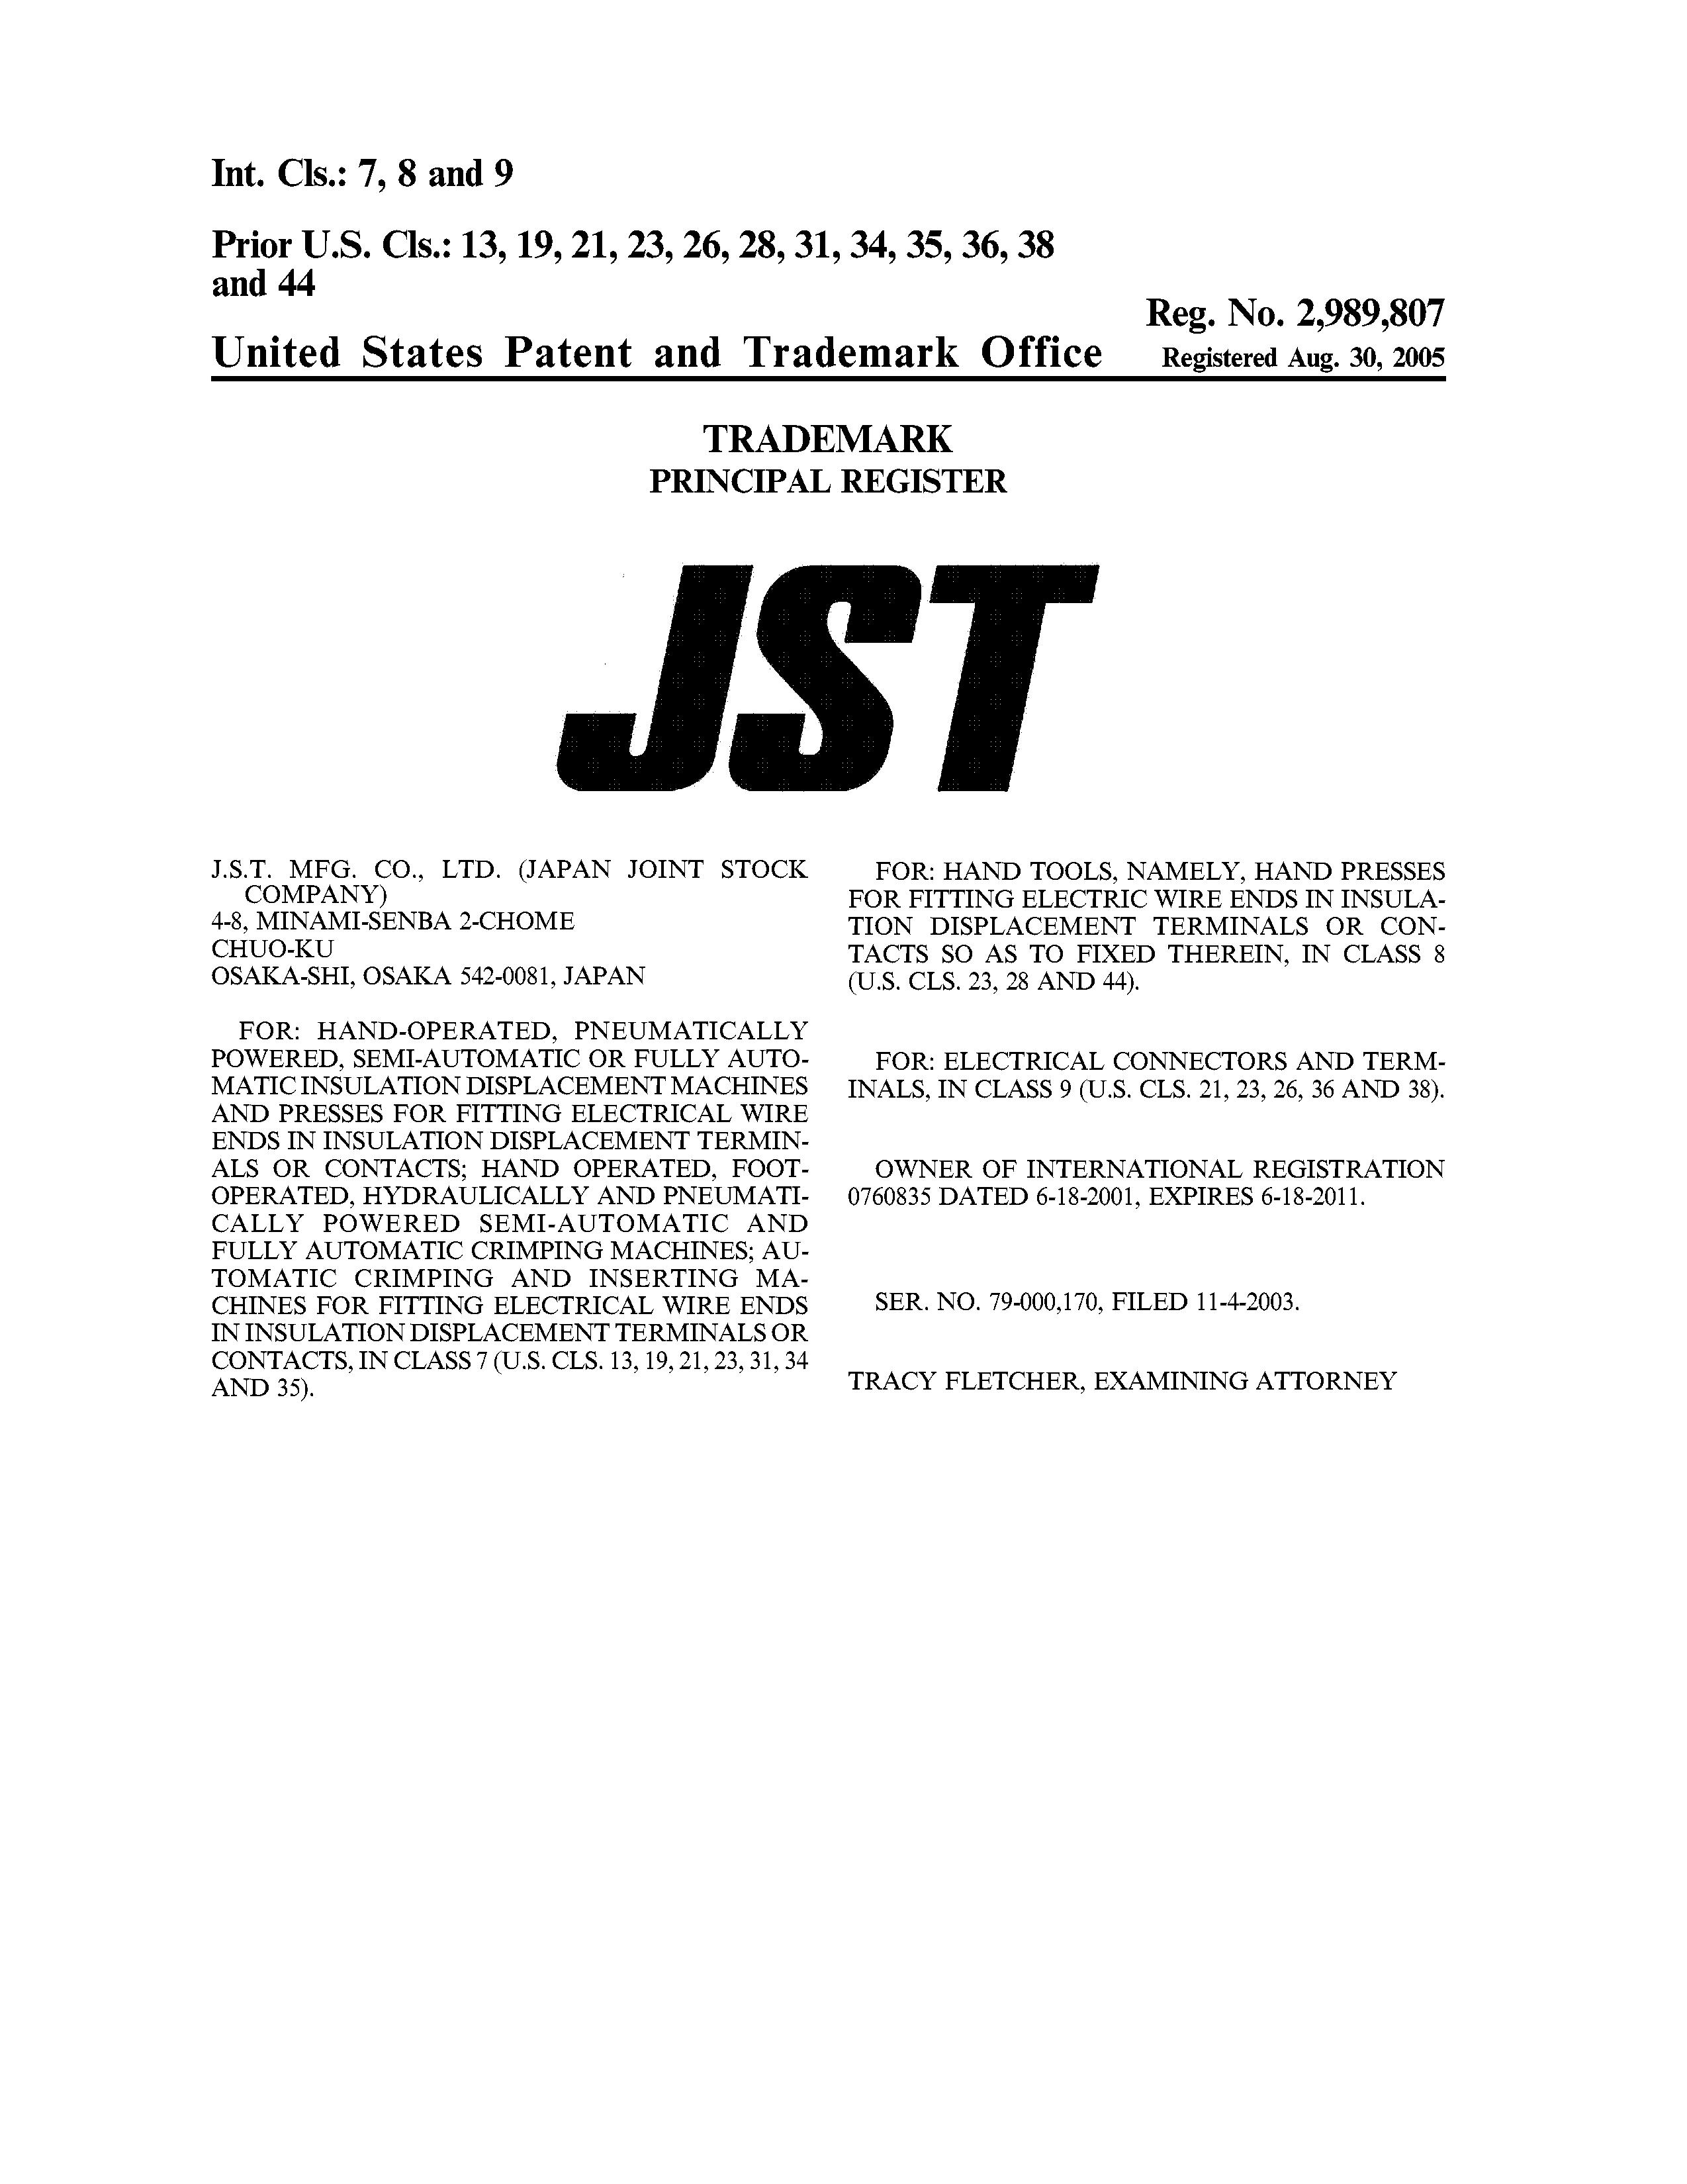 JST - J.s.t. Mfg. Co., Ltd. Trademark Registration